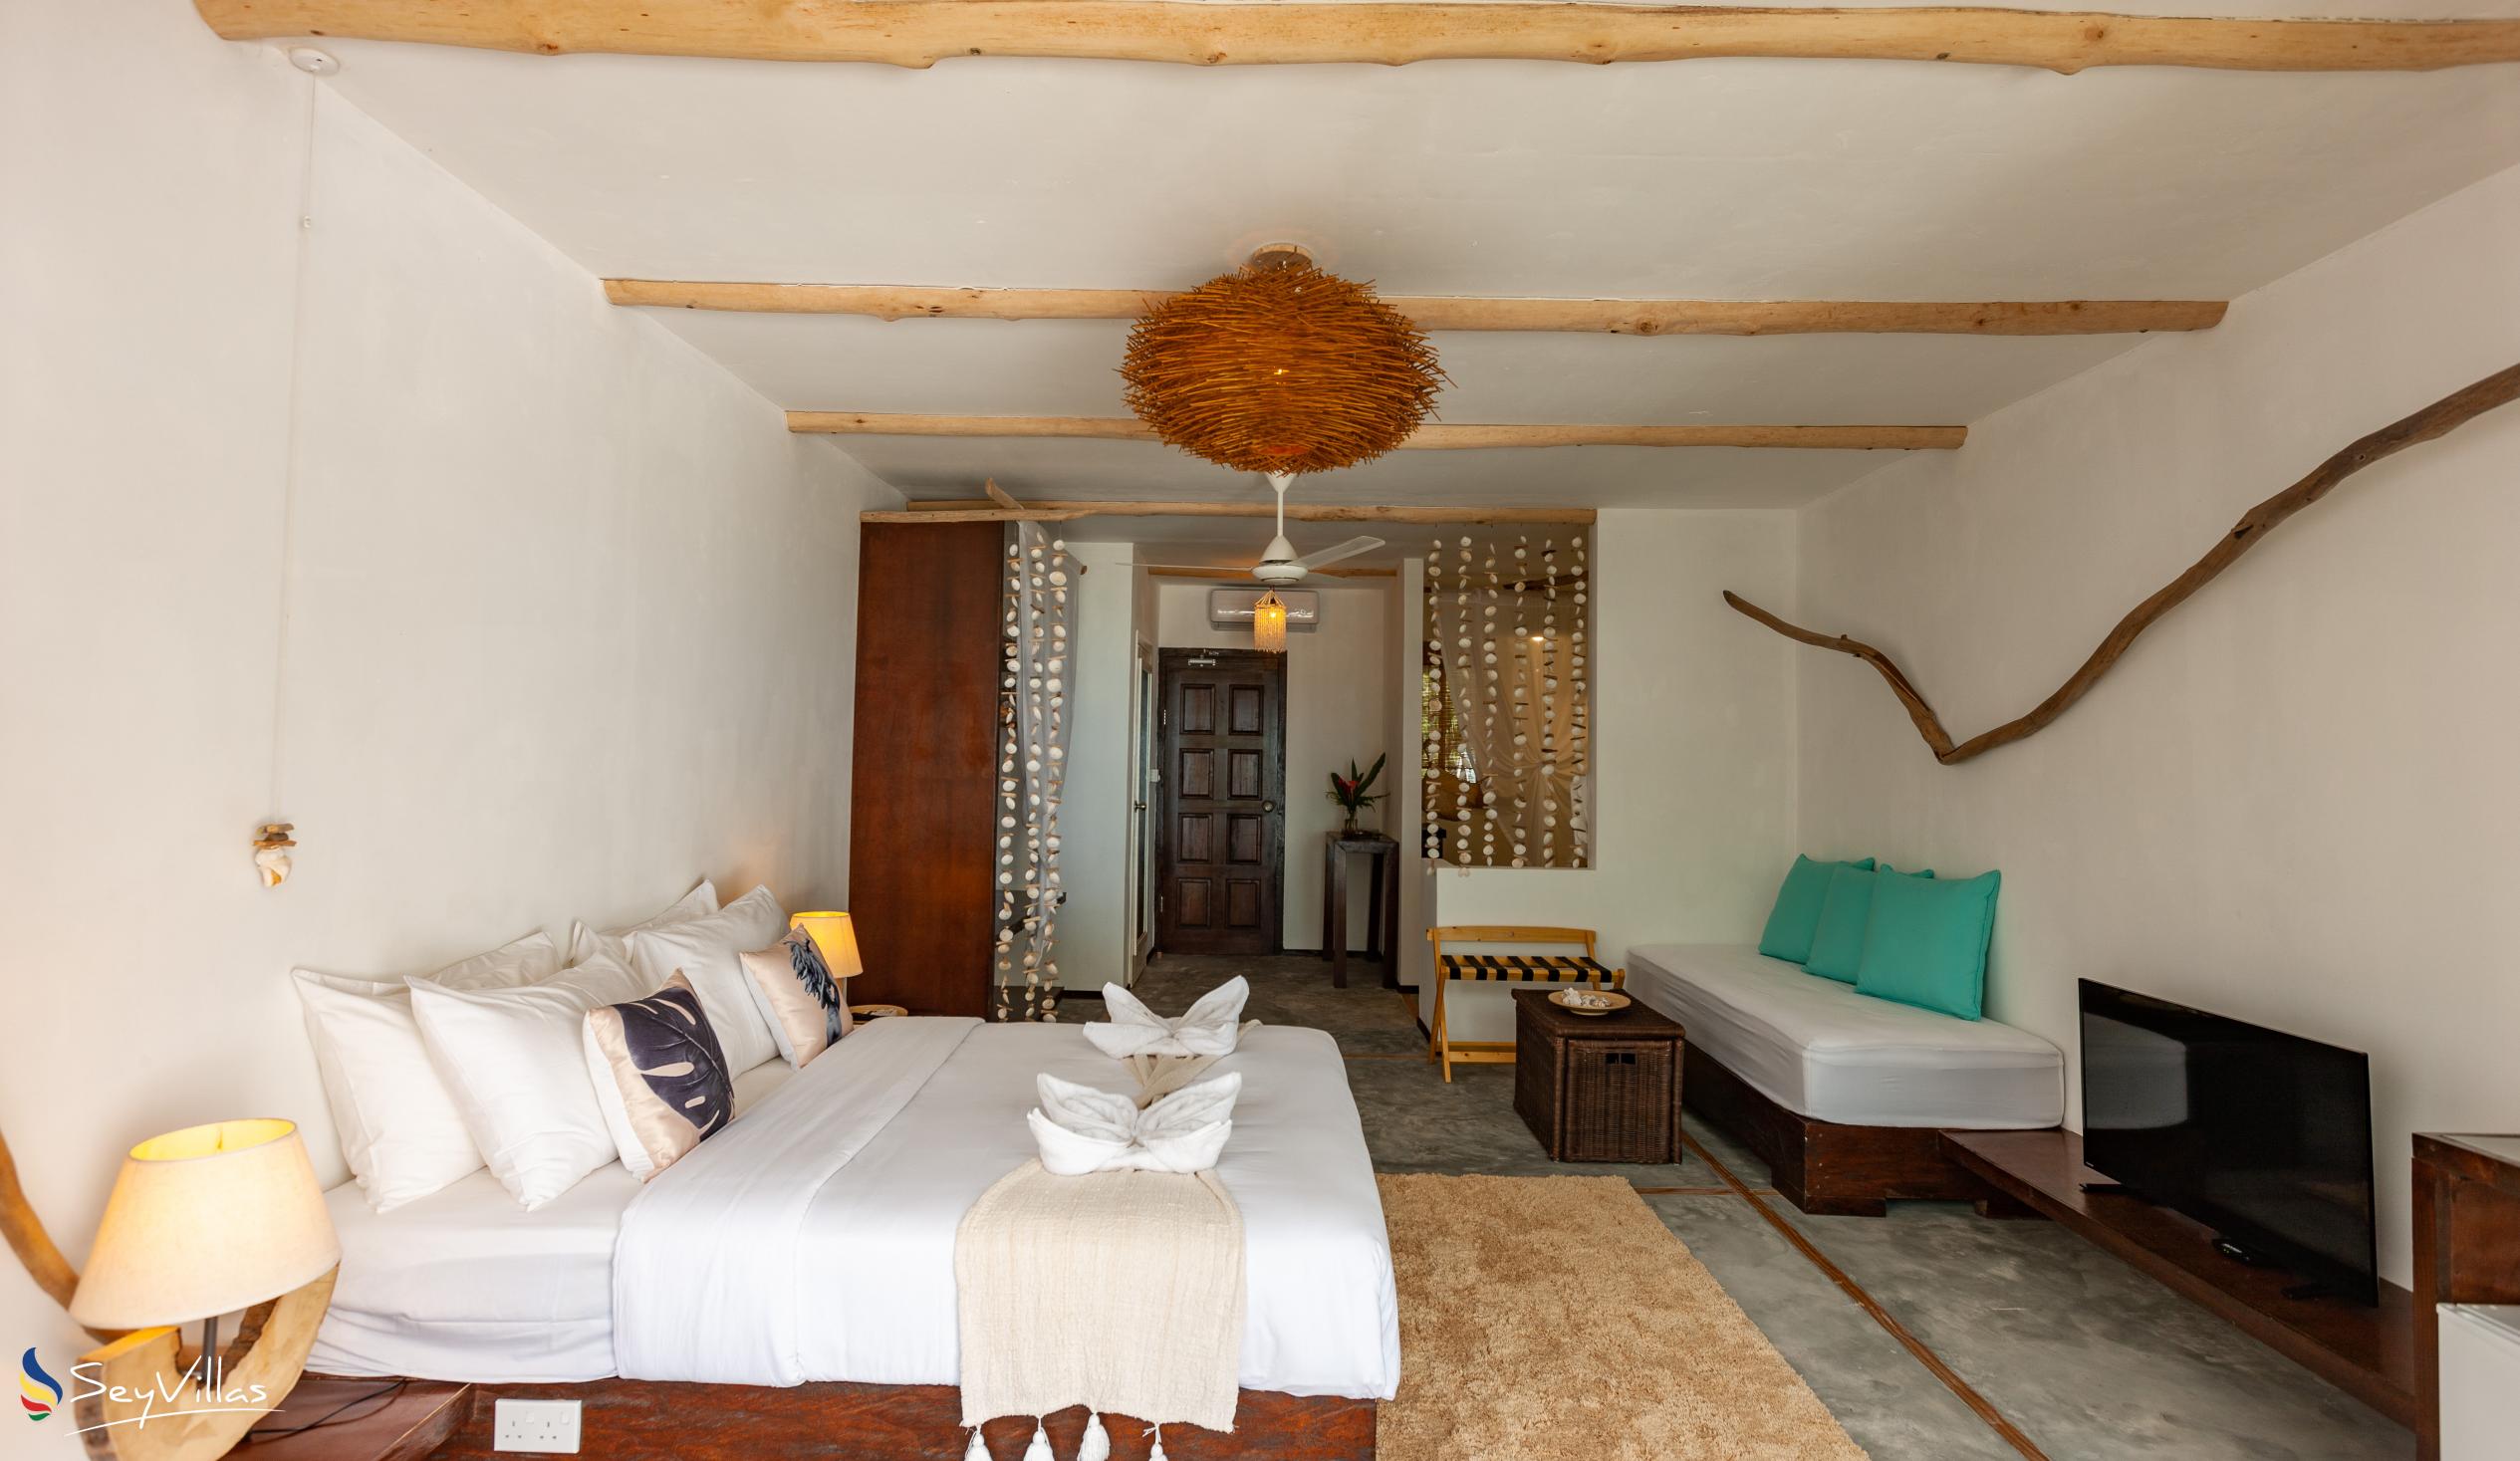 Photo 136: Bliss Hotel Praslin - Beach House - Beach Superior Room - Praslin (Seychelles)